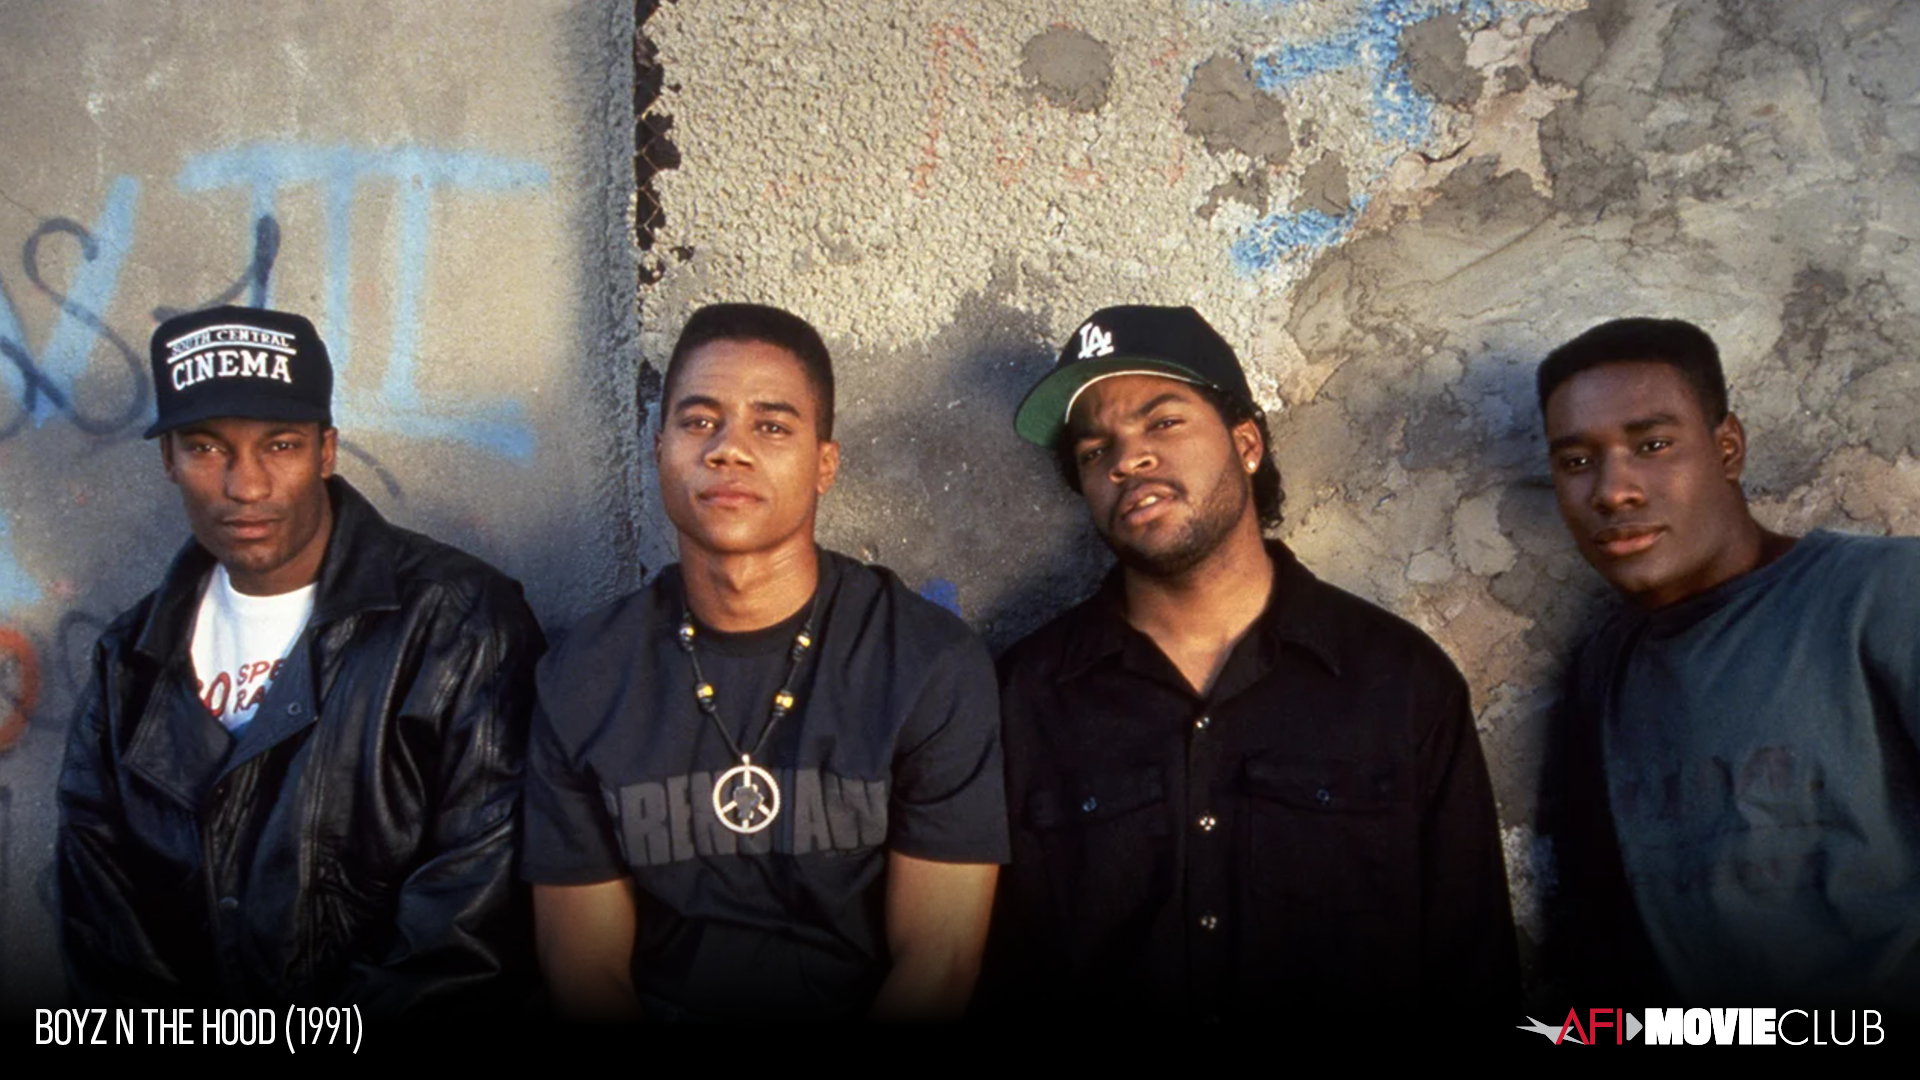 Boyz N The Hood Film Still - Cuba Gooding Jr., Ice Cube, Morris Chestnut, and John Singleton